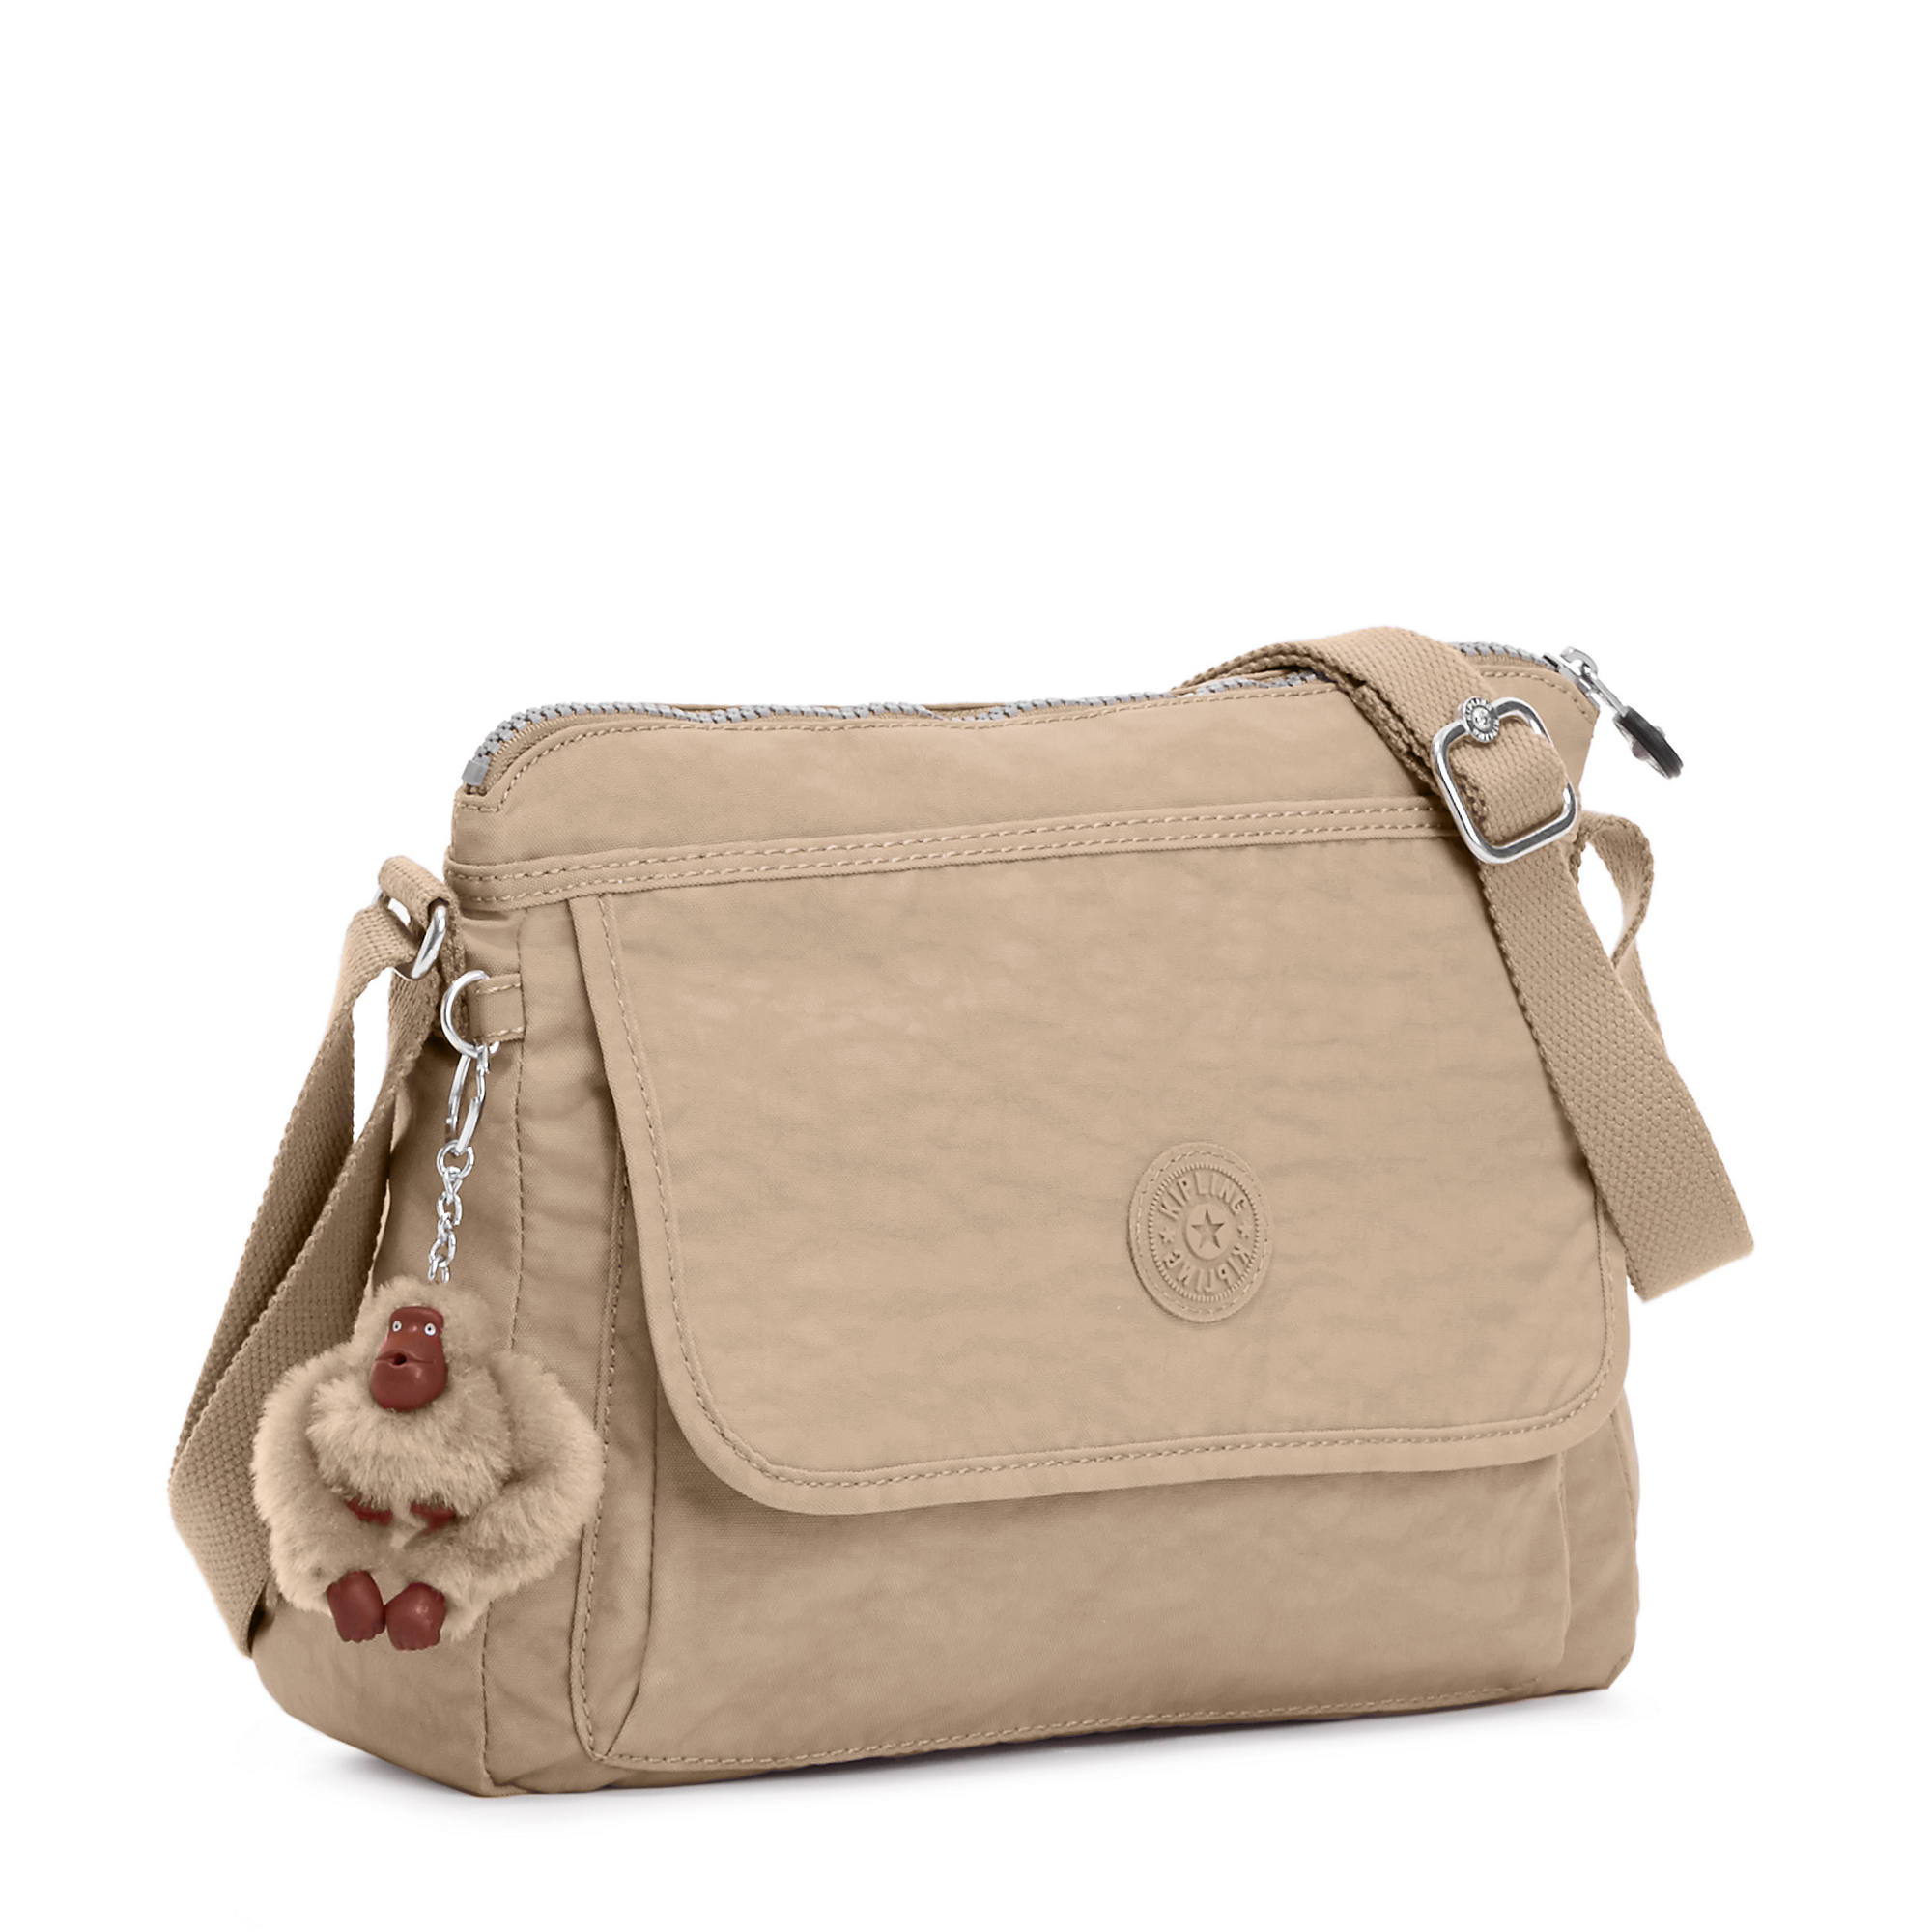 Kipling Aisling Crossbody Bag | eBay